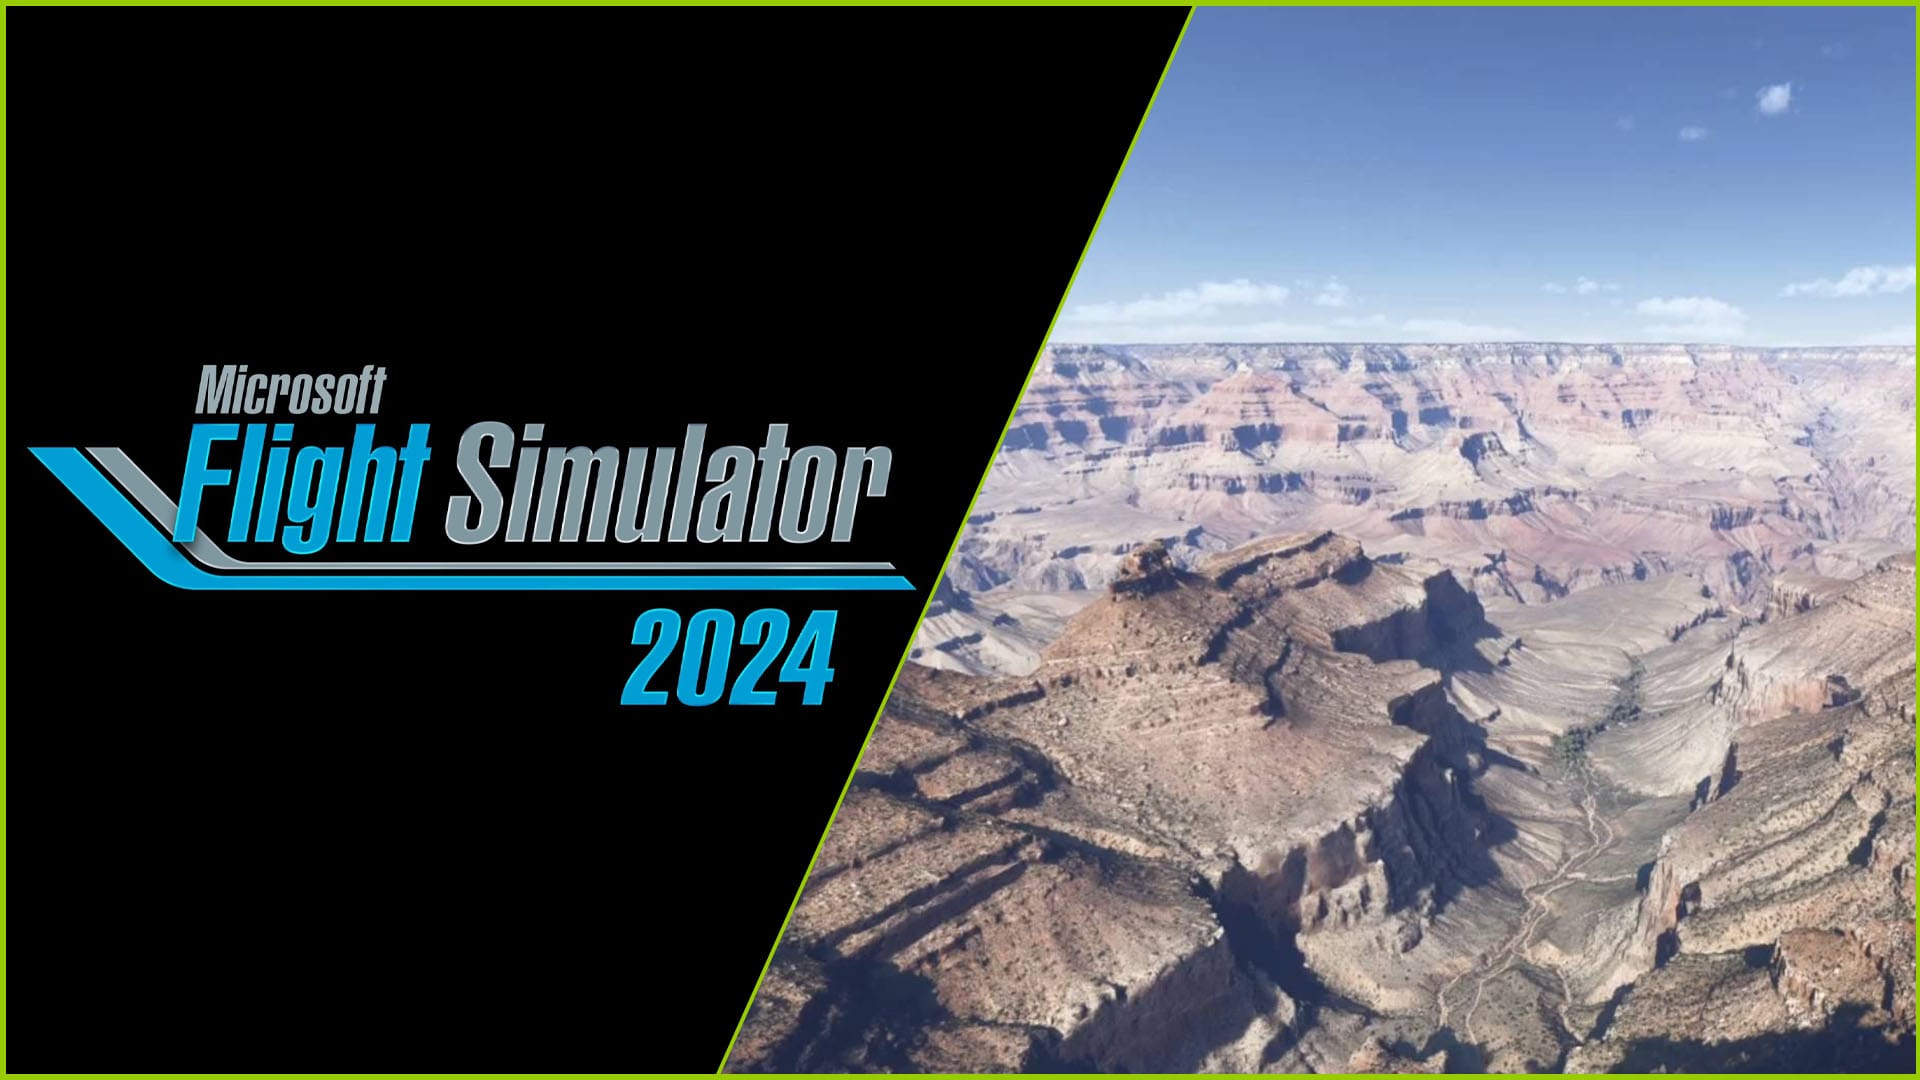 Microsoft Flight Simulator 2024 Spectacular New Screenshot Shows Ultra-Detailed Grand Canyon